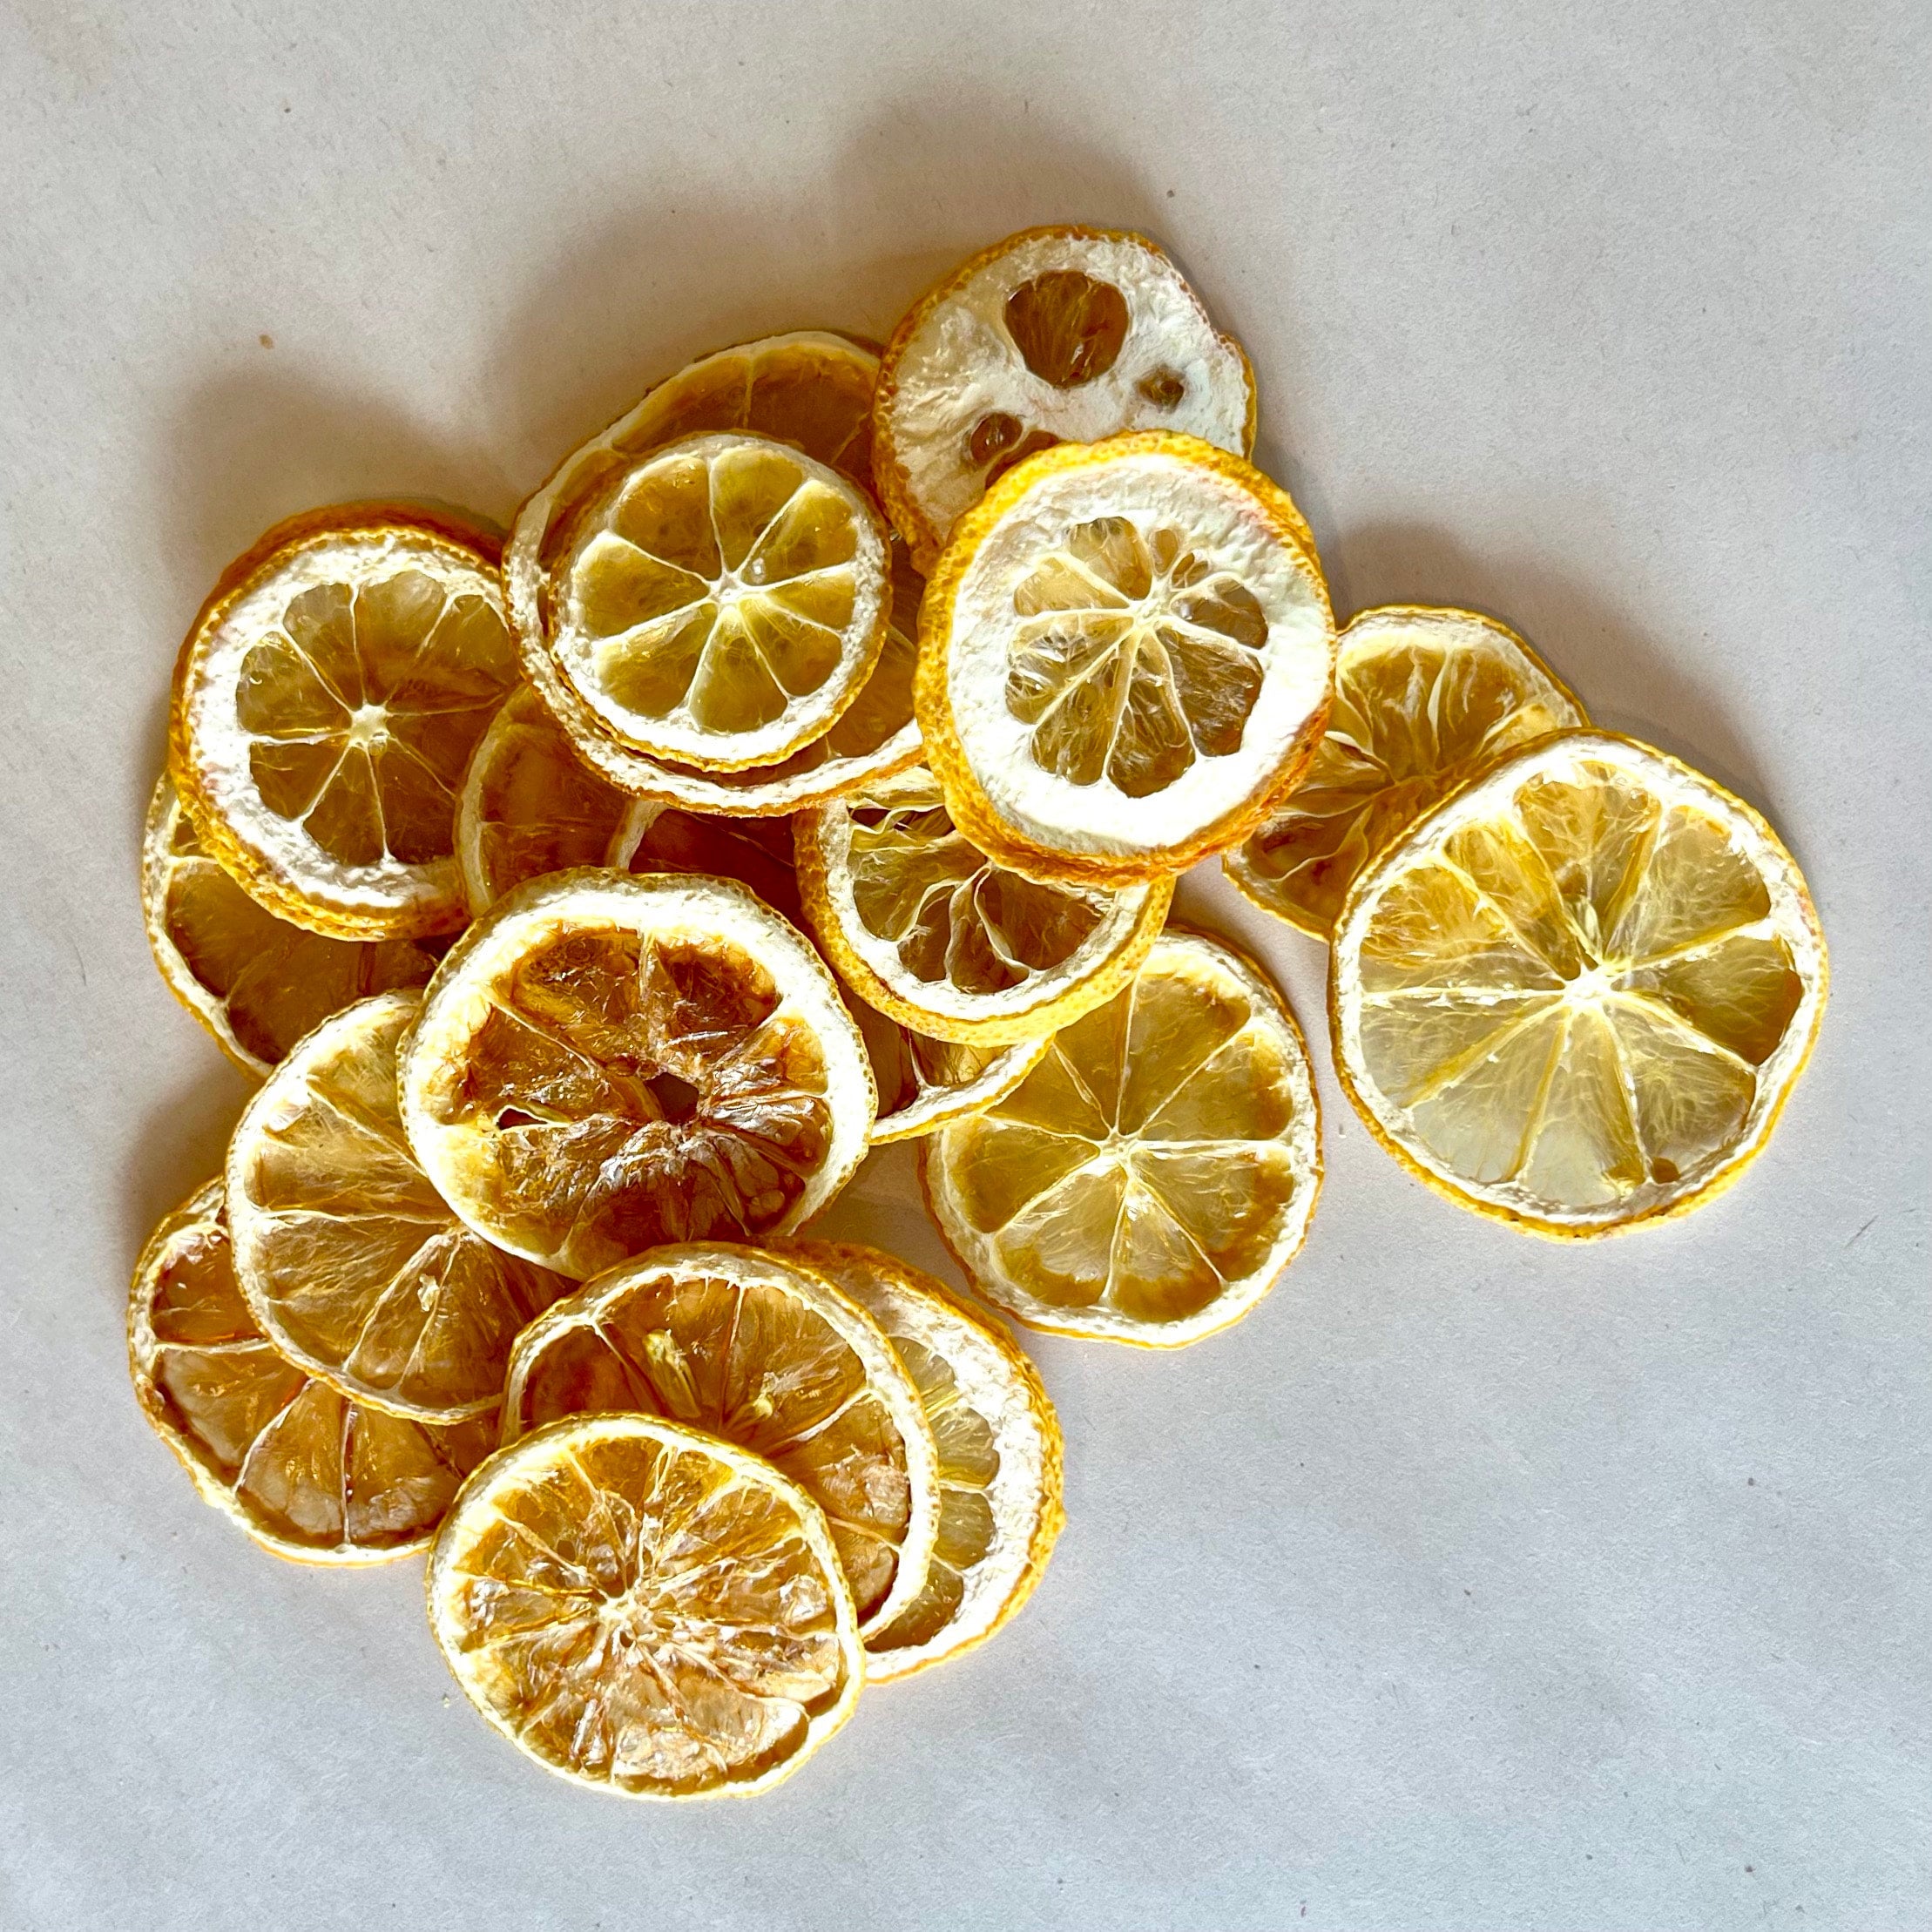 Dried Lemon Wheels (More Options)